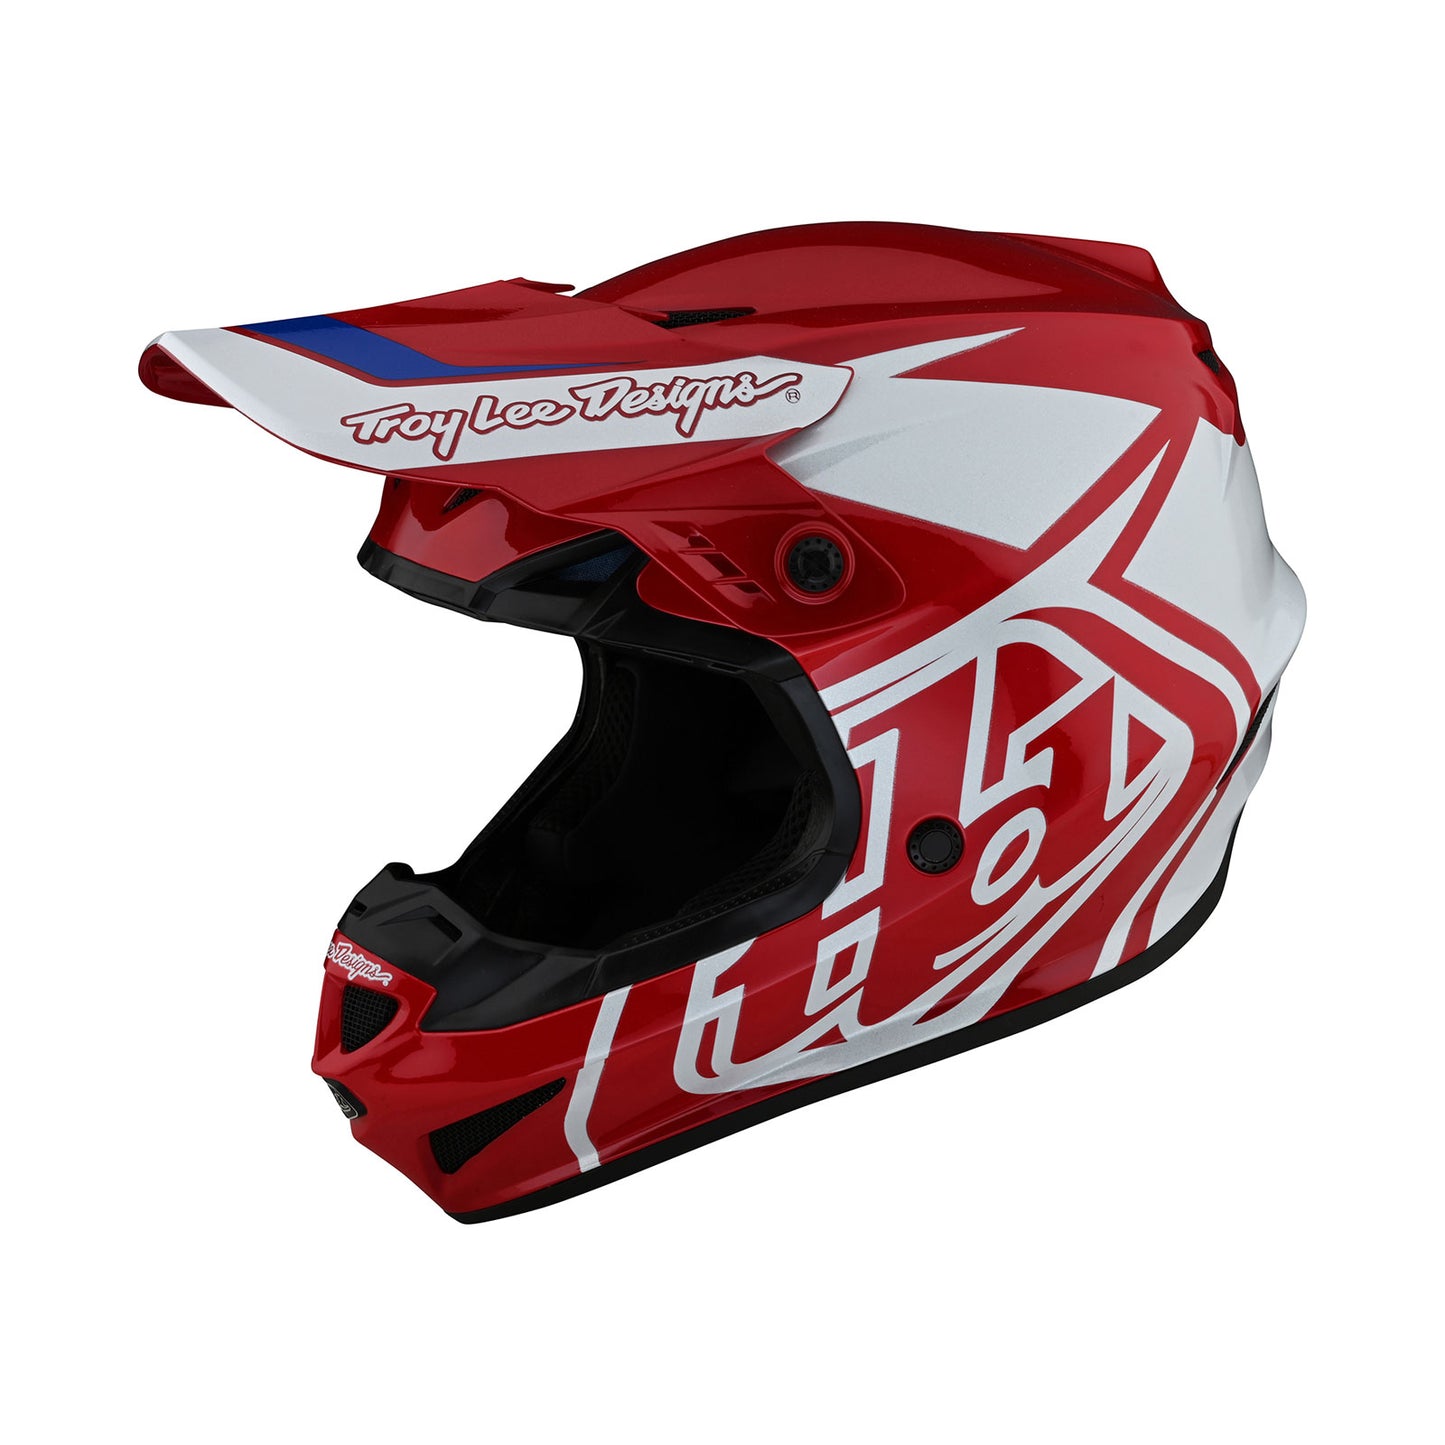 GP Helmet Overload Red / White